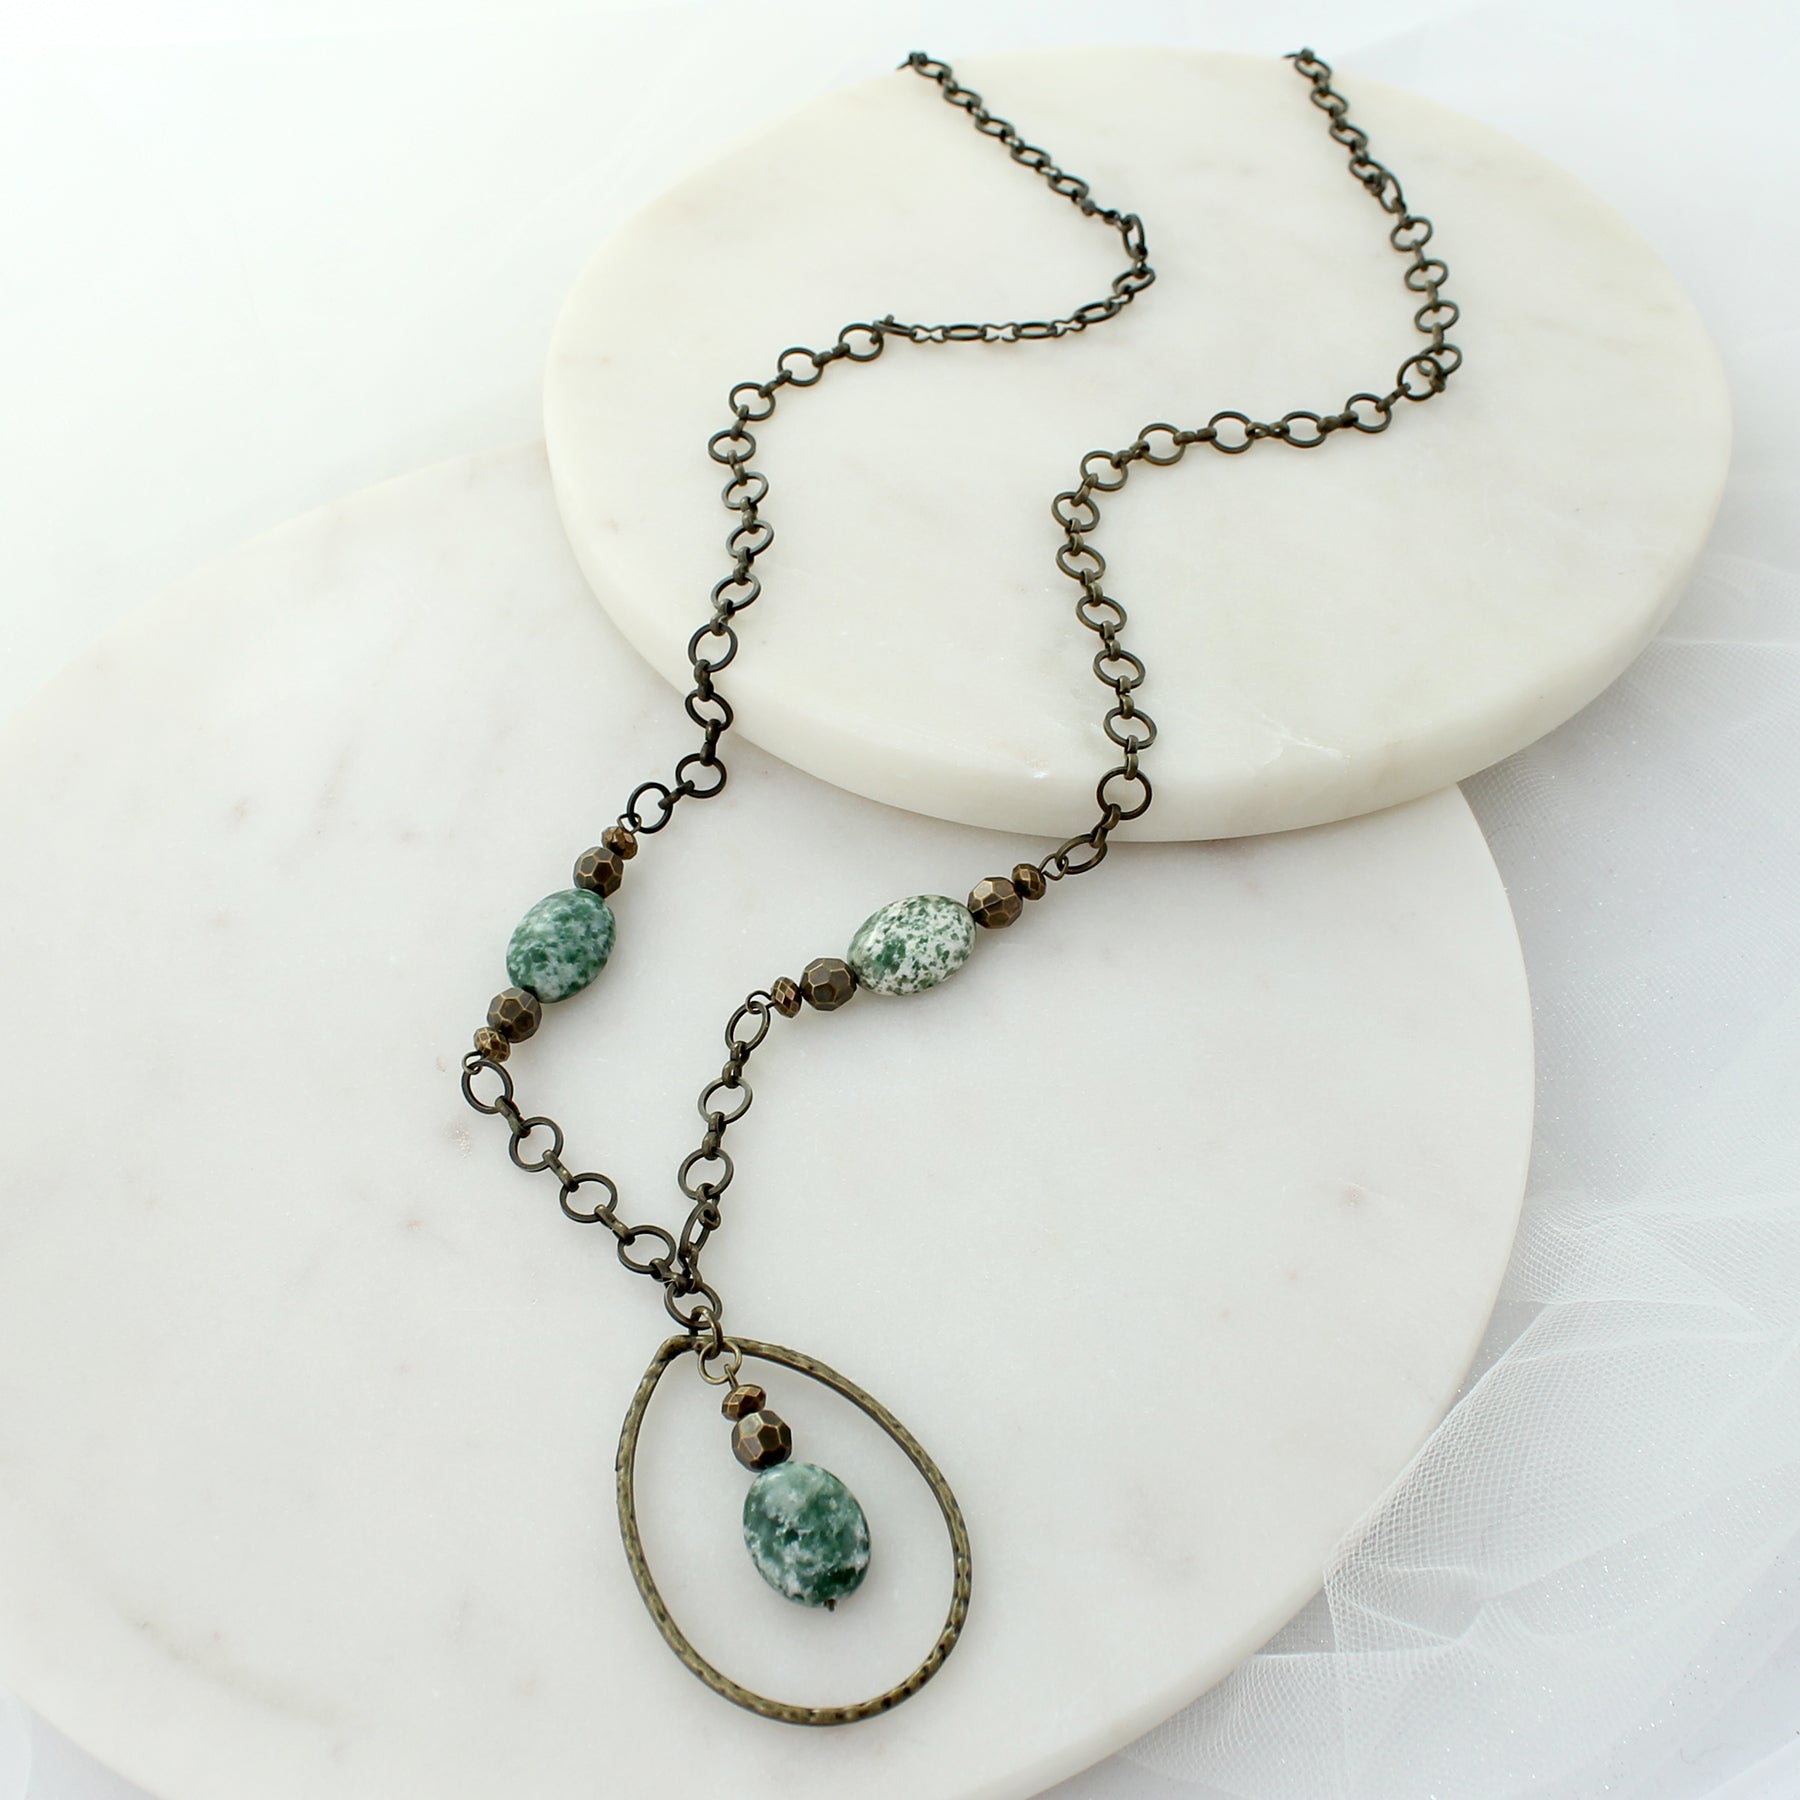 34” Green Stone & Vintage Bead Necklace w/Teardrop Pendant